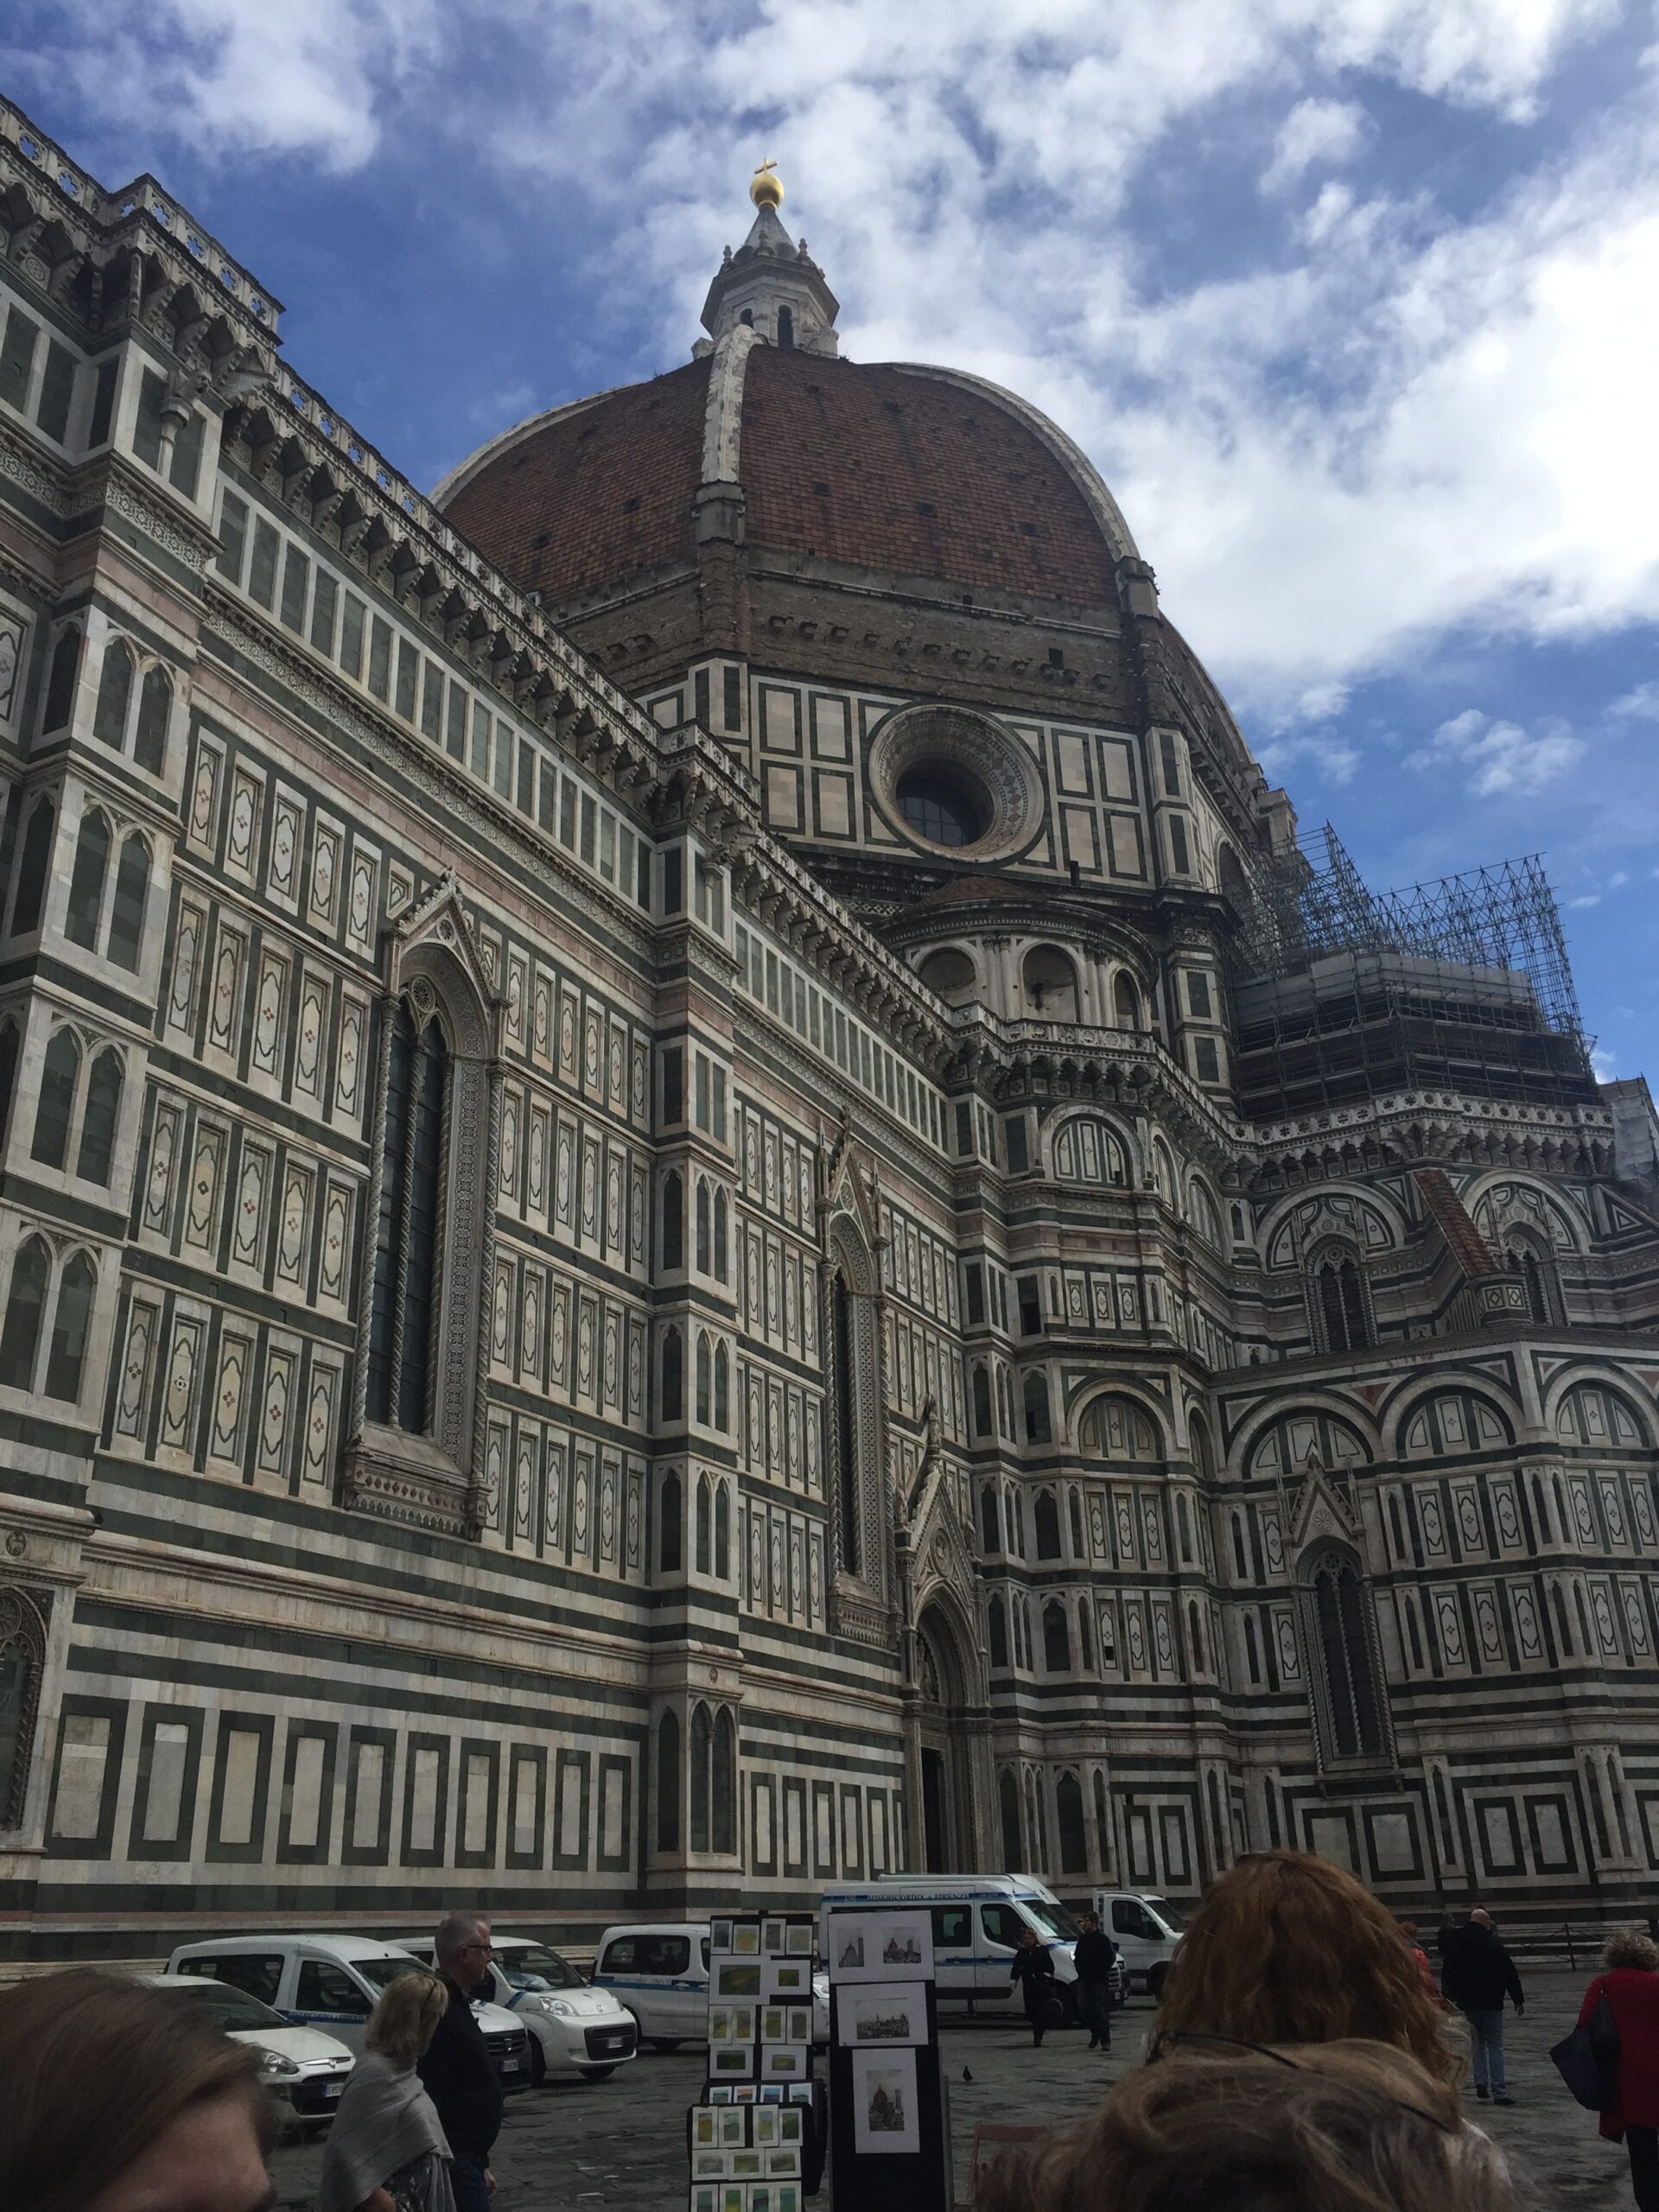 outer facade of the Duomo in Florence